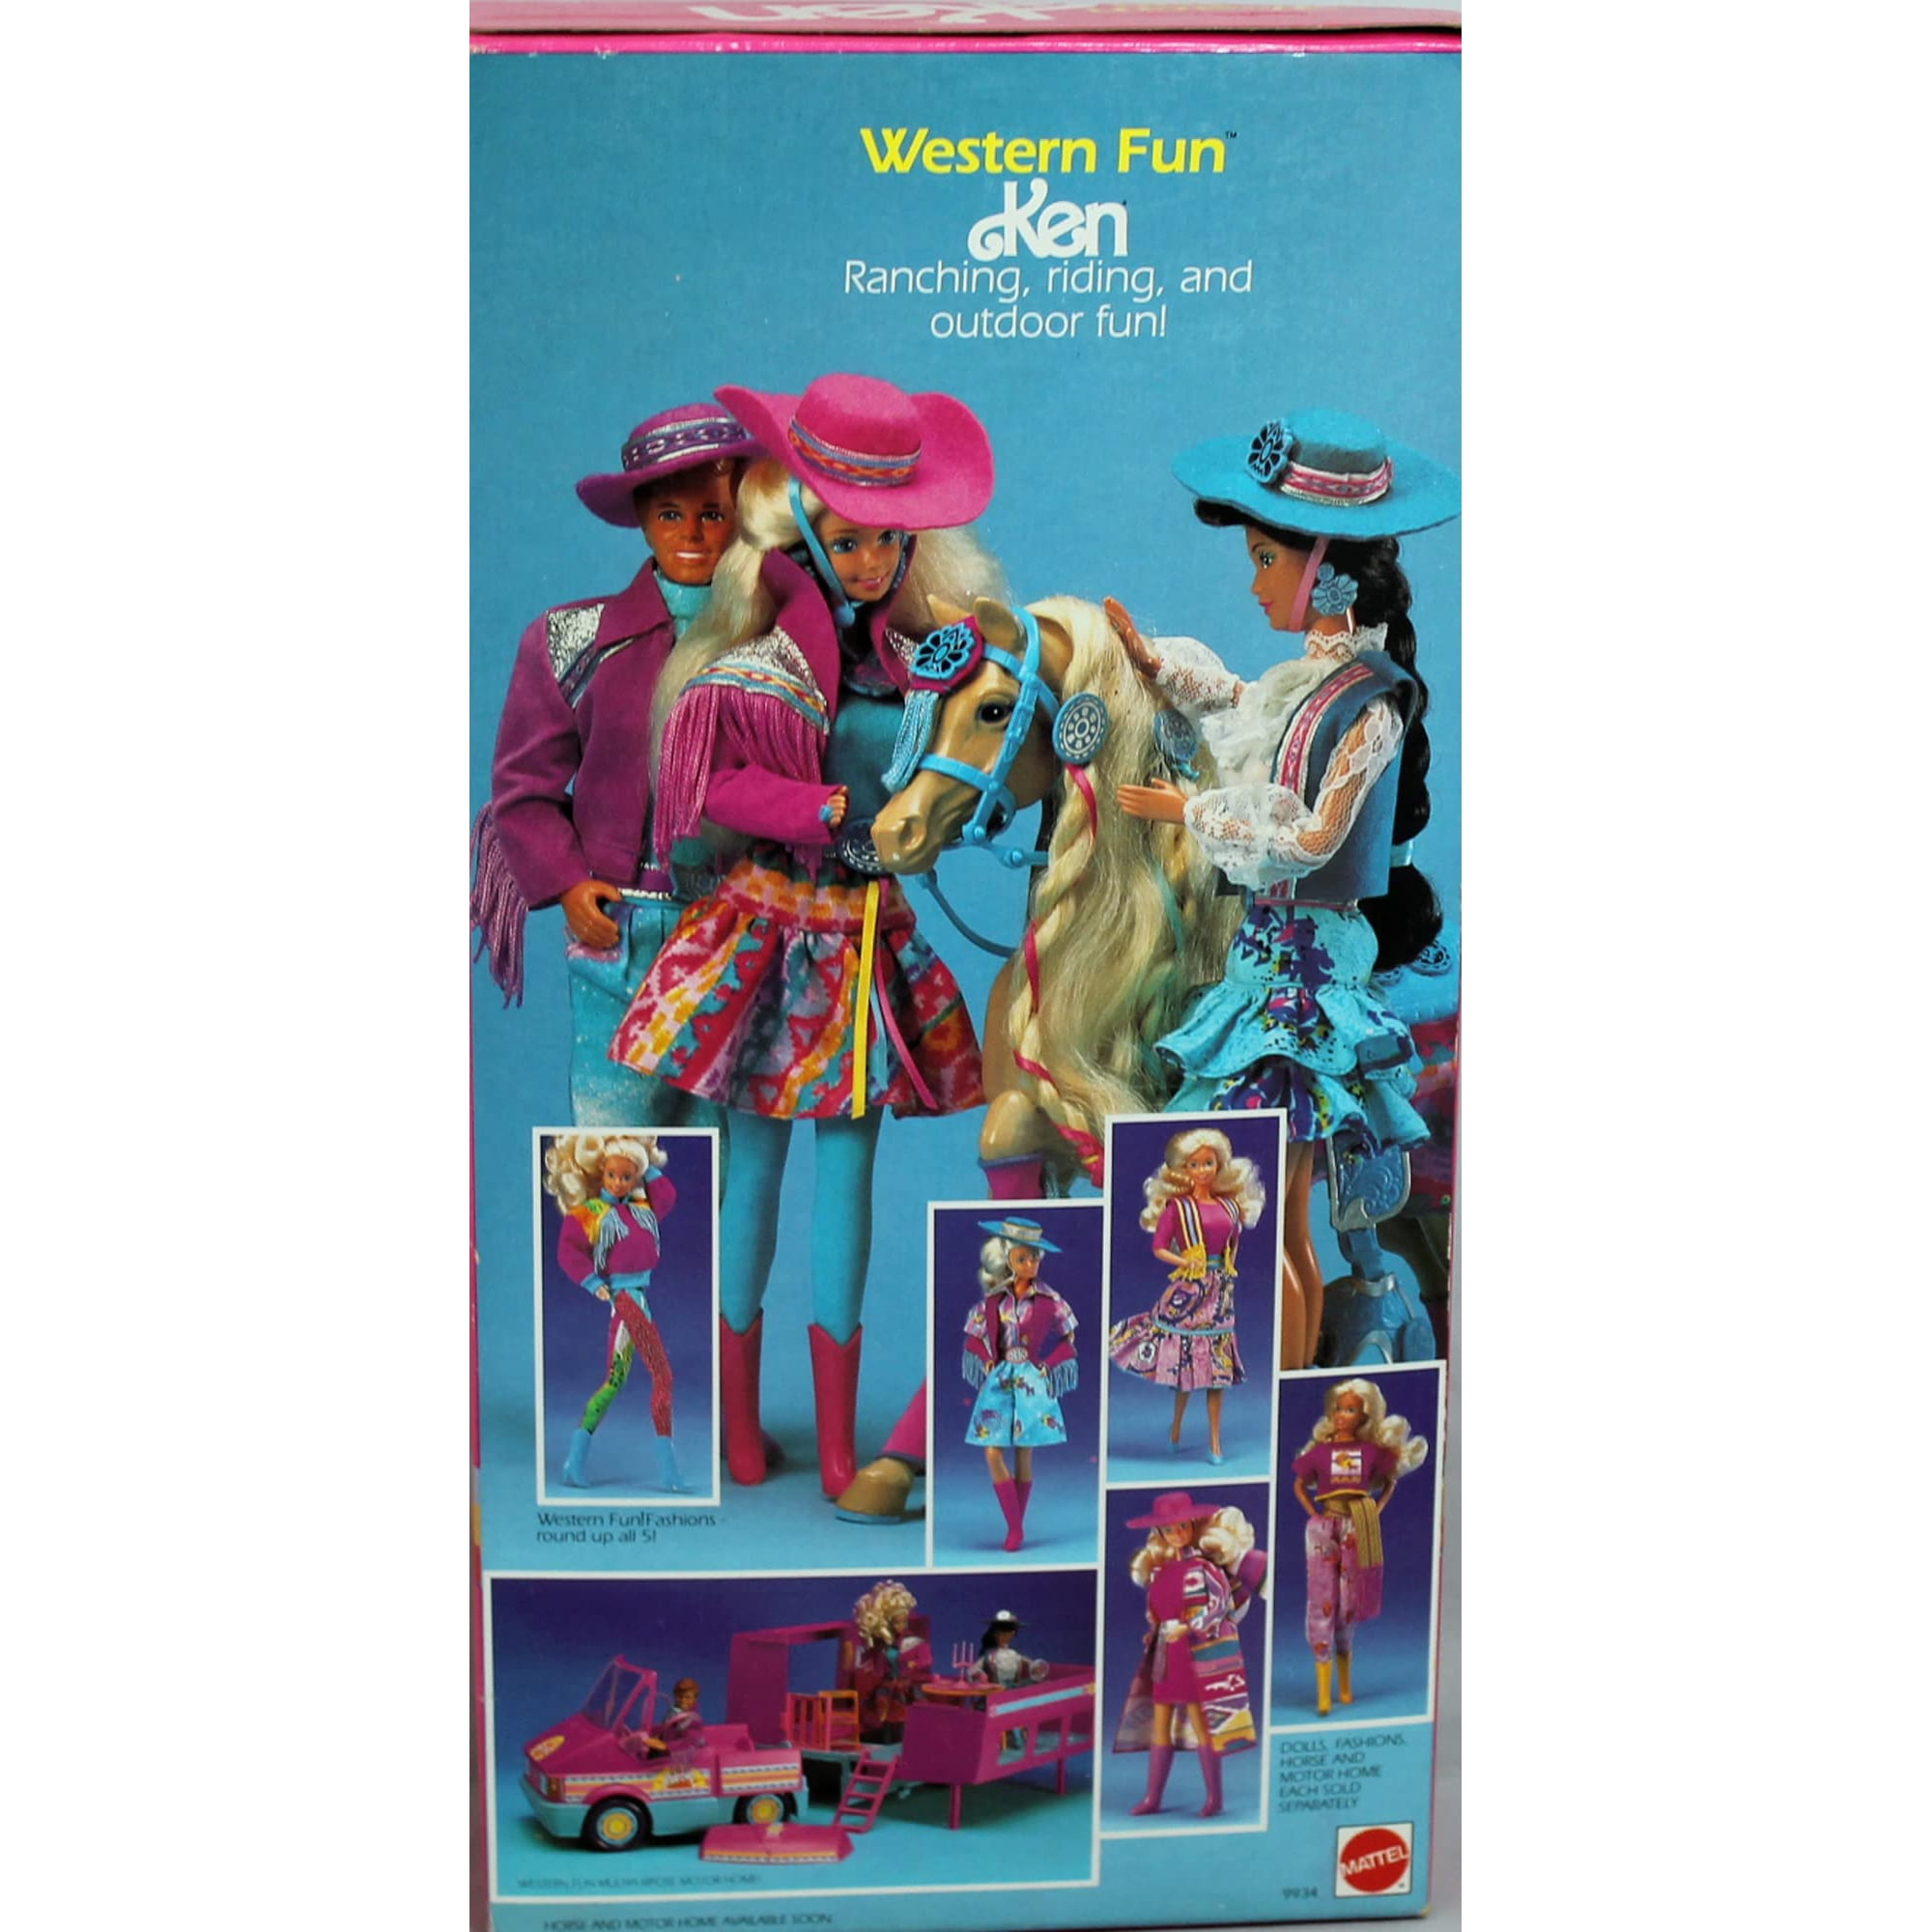 Barbie - Western Fun KEN Doll (1989 Mattel Hawthorne) Barbie